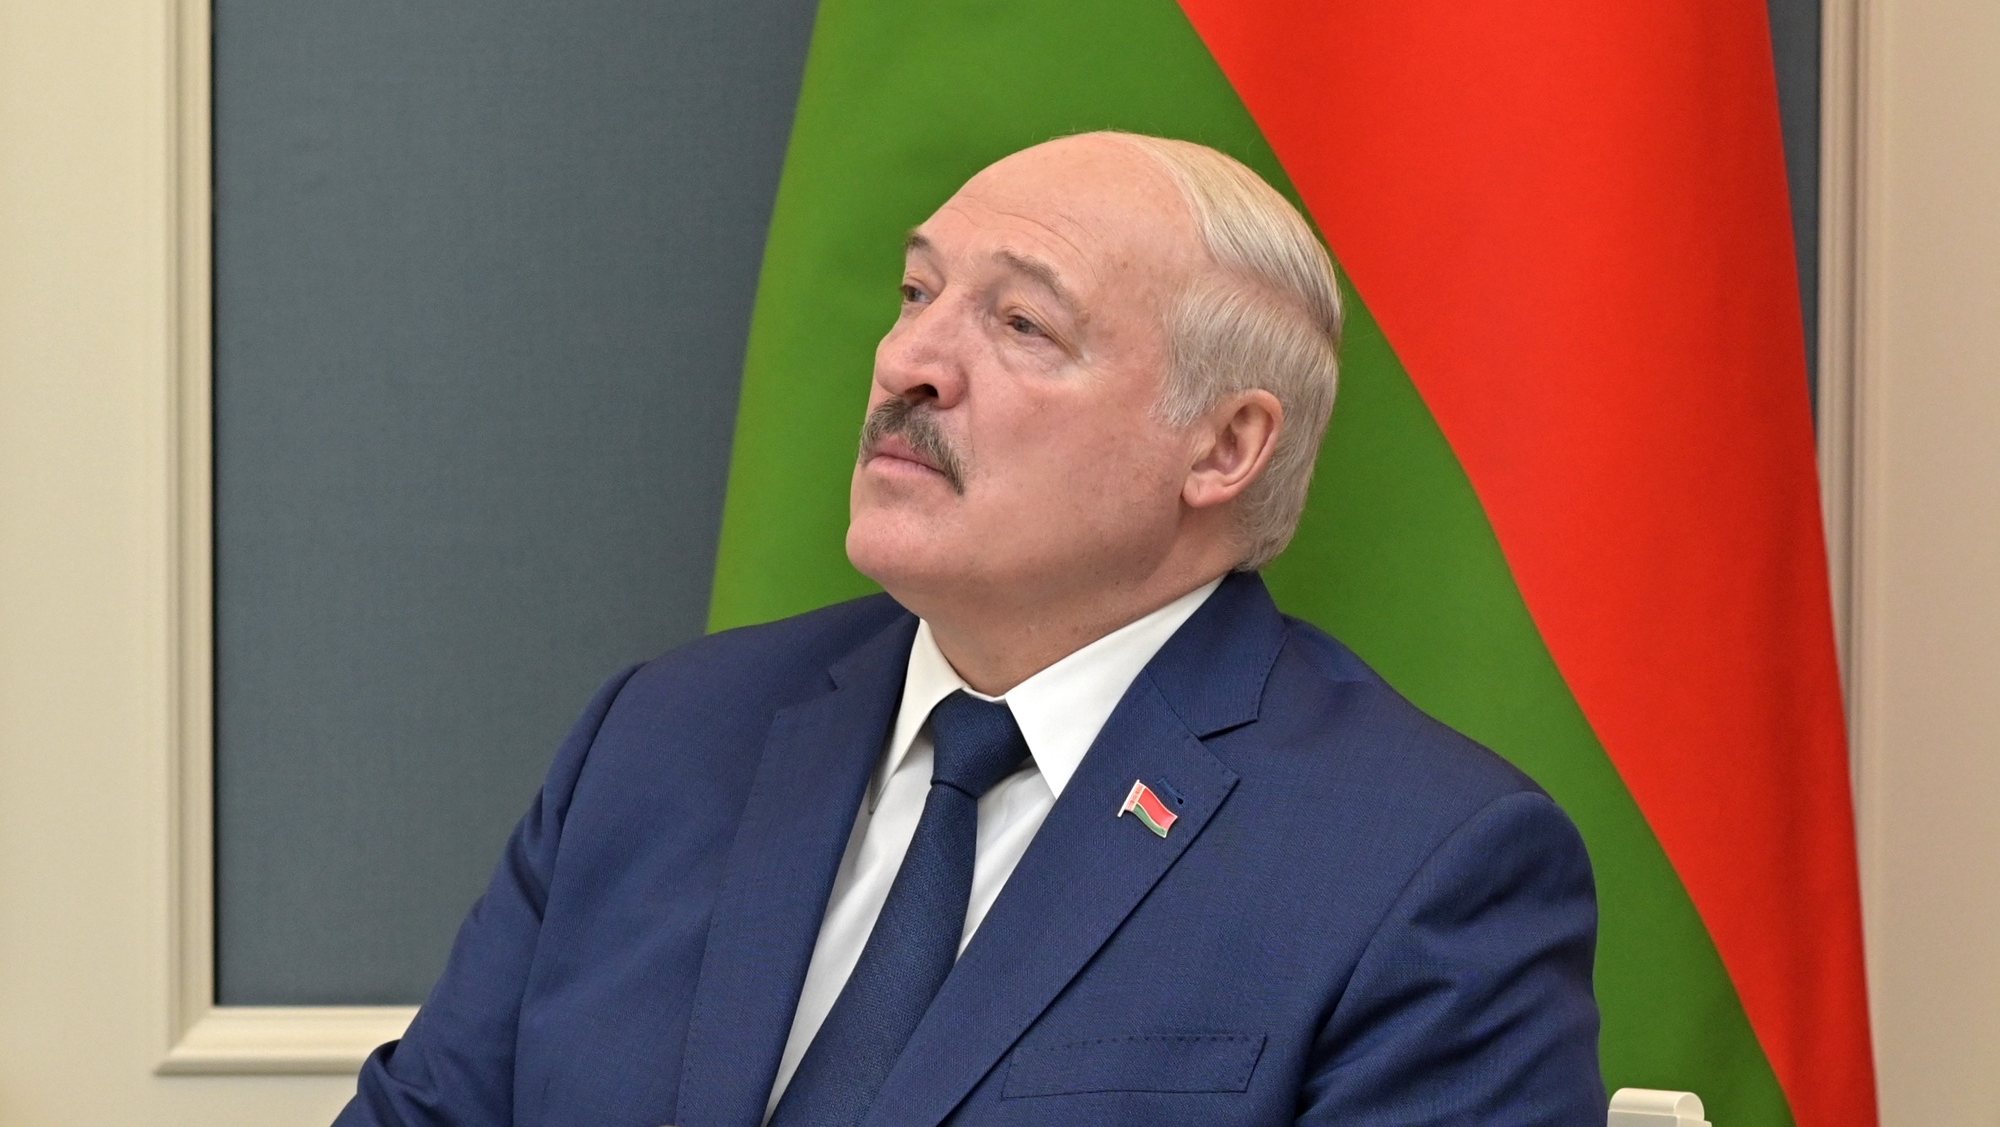 O Presidente da Bielorússia, Aleksander Lukashenko